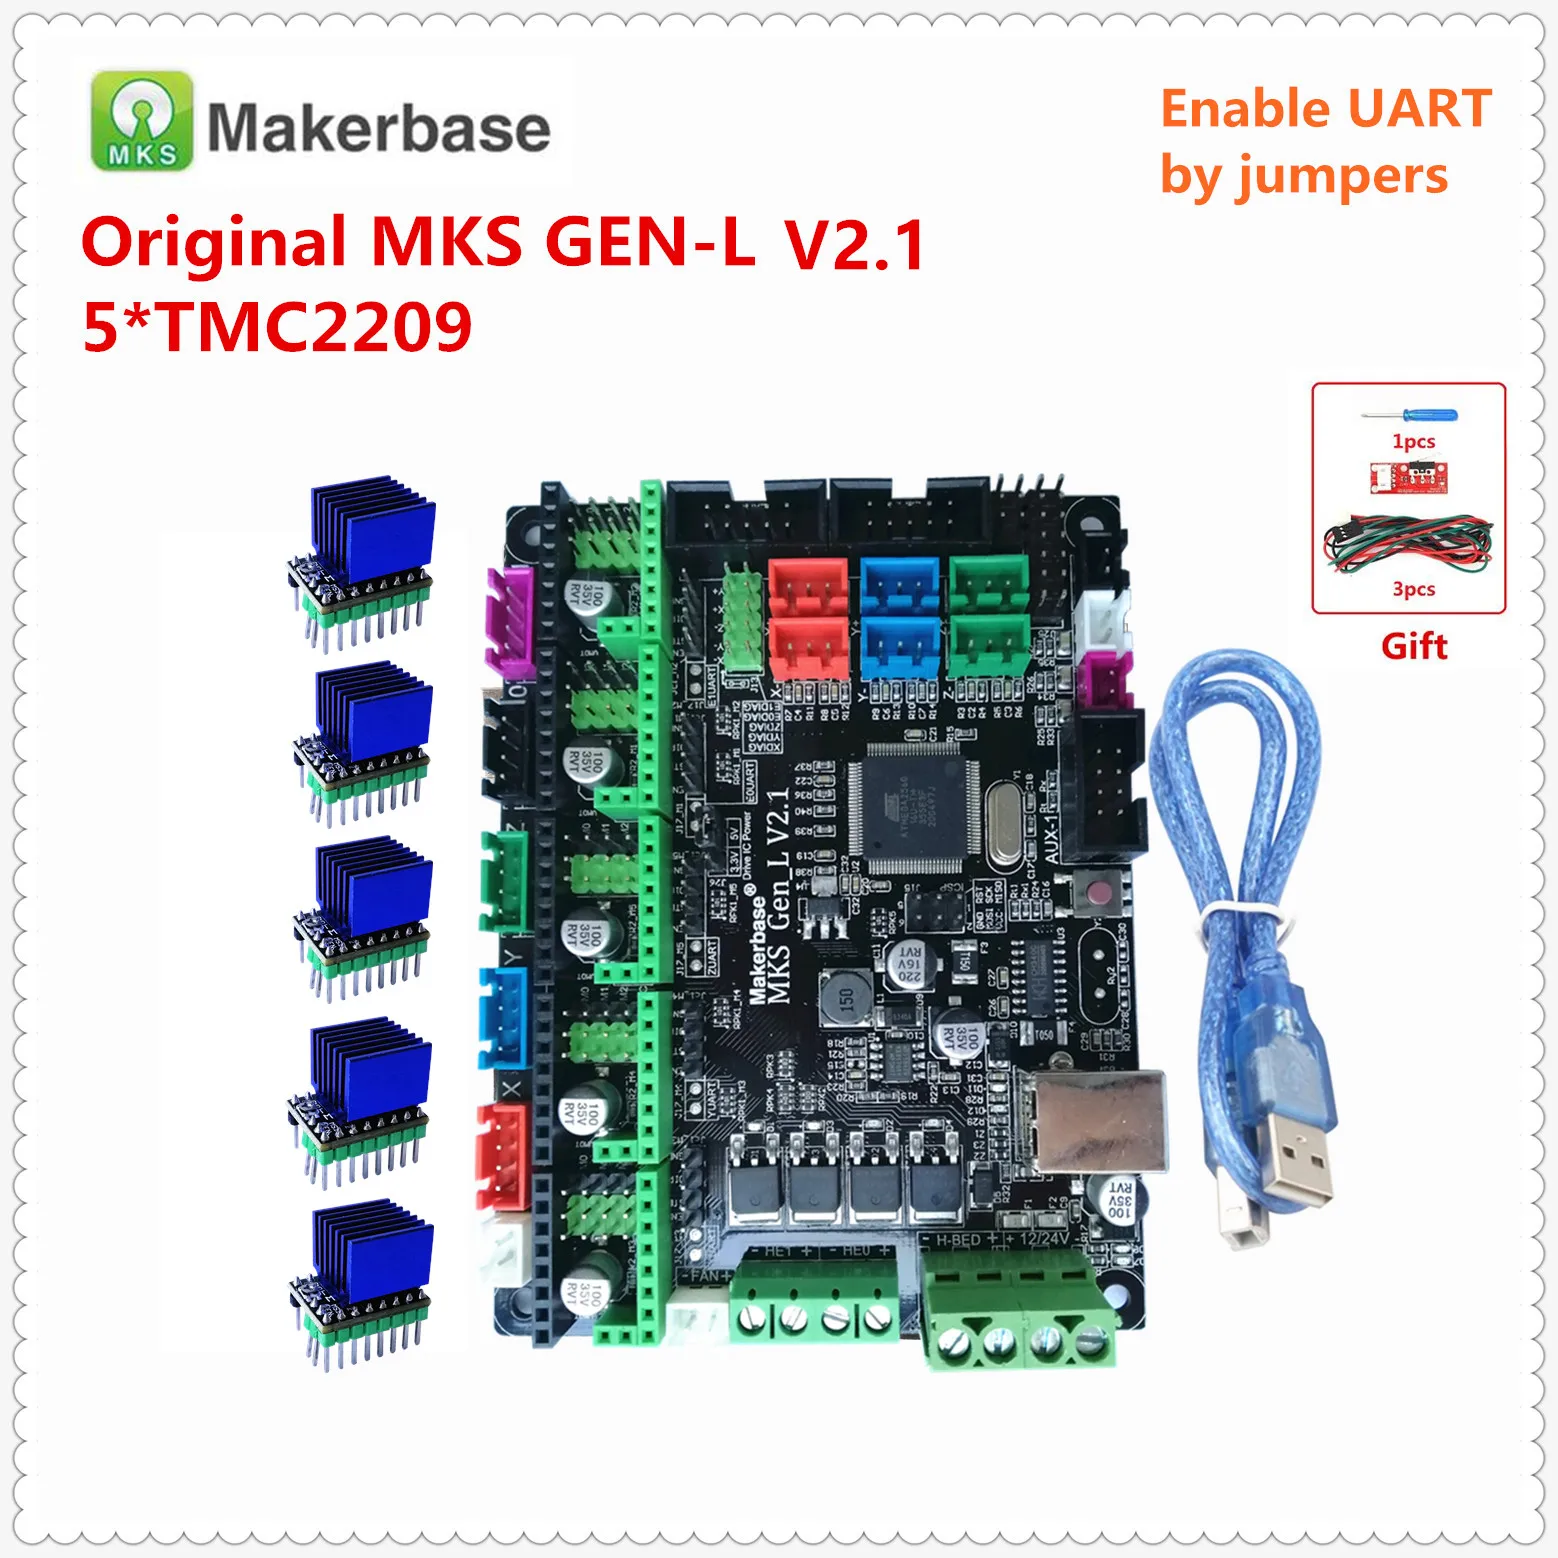 makerbase original mks gen l v2 1 3d printer control card mks motherboard support a4988 drv8825 tmc2130 tmc2208 tmc2209 lv8729 free global shipping